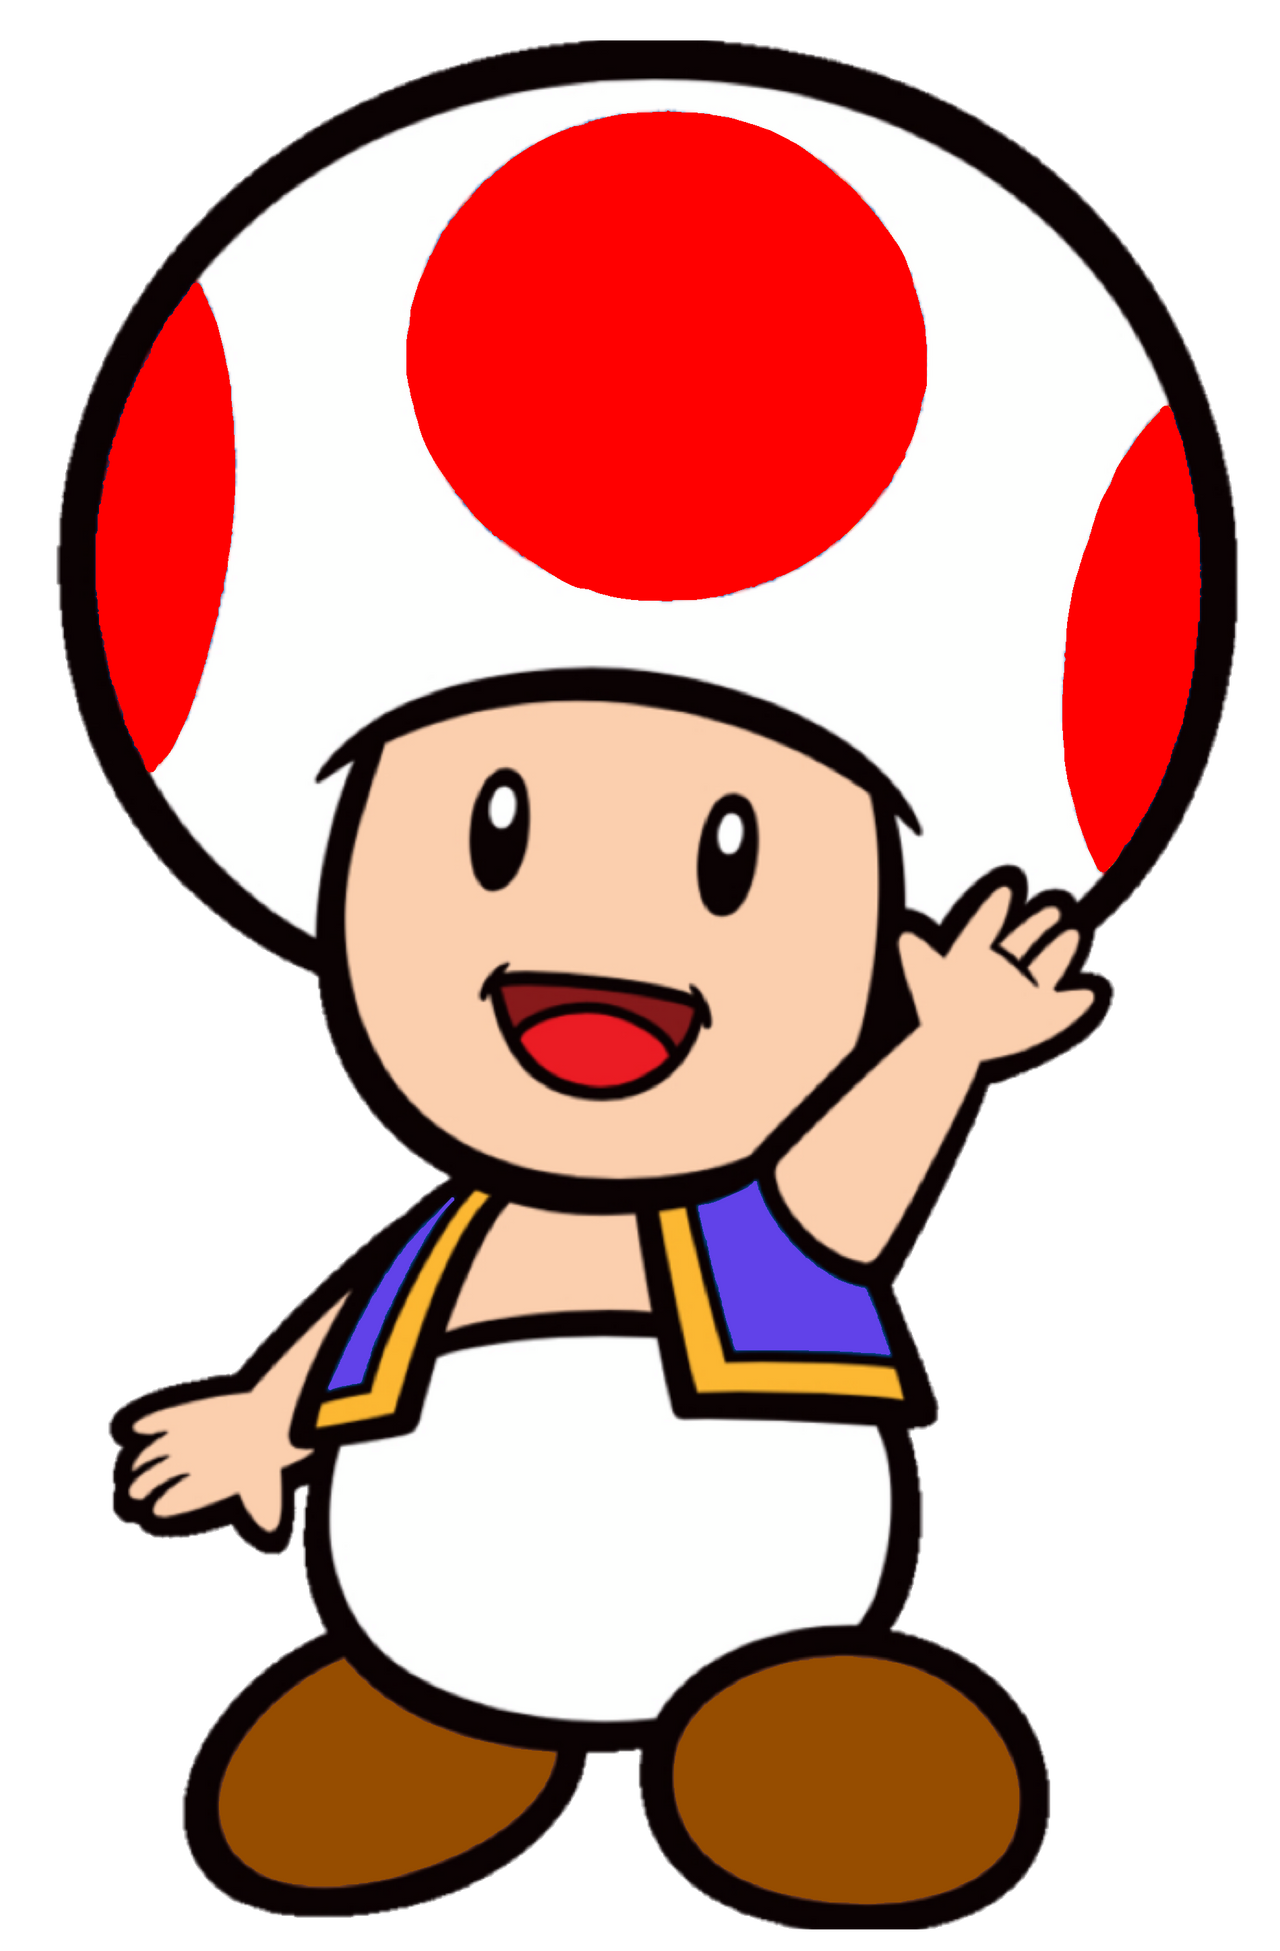 Super Mario: SM64 Toad 2D by Joshuat1306 on DeviantArt